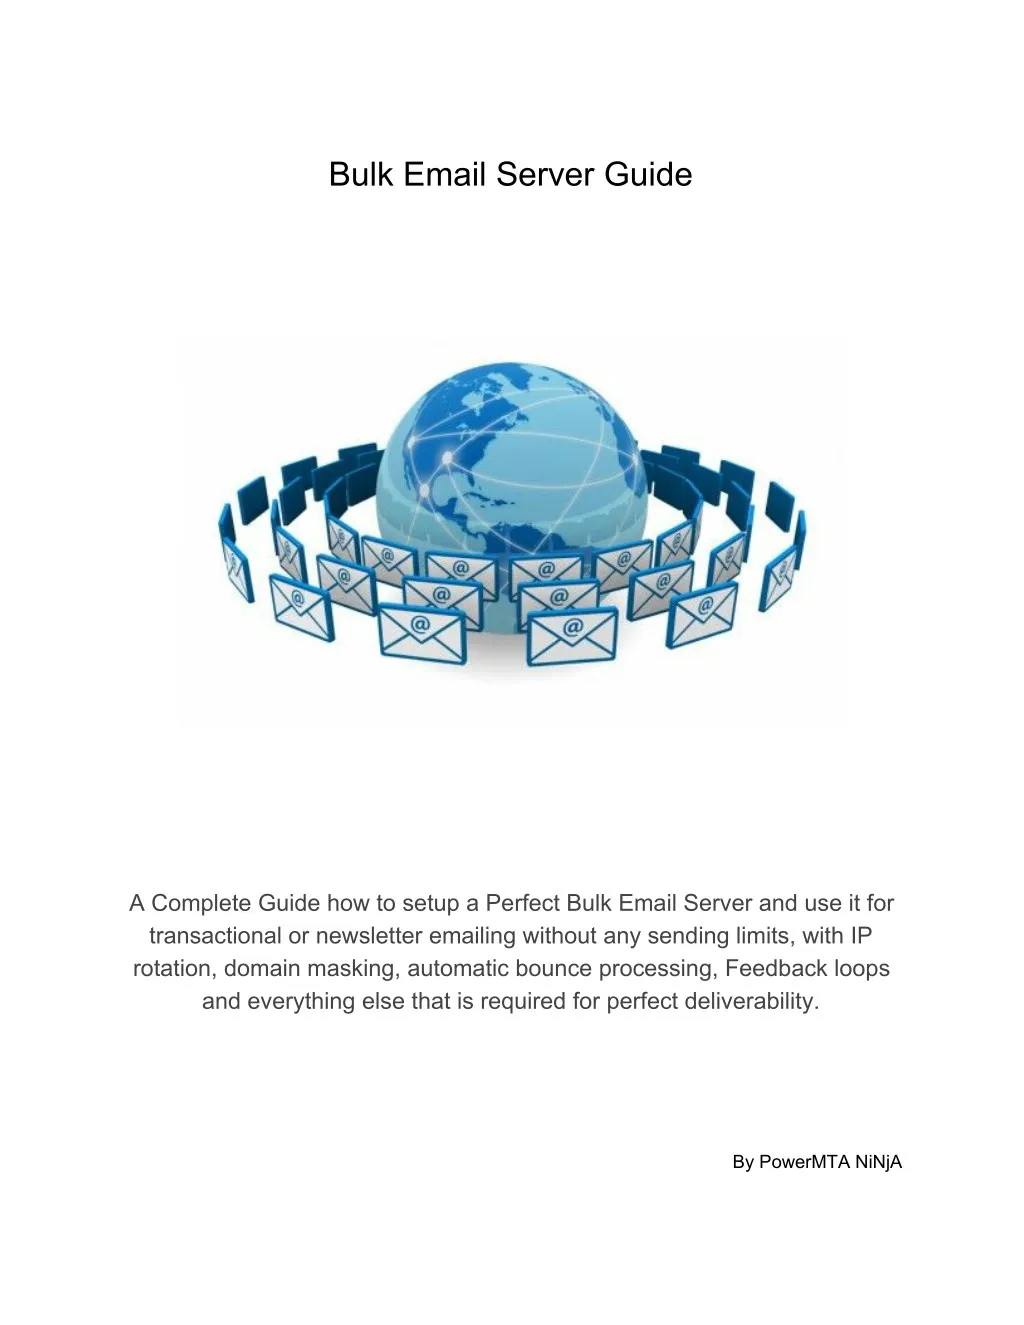 bulk email server guide